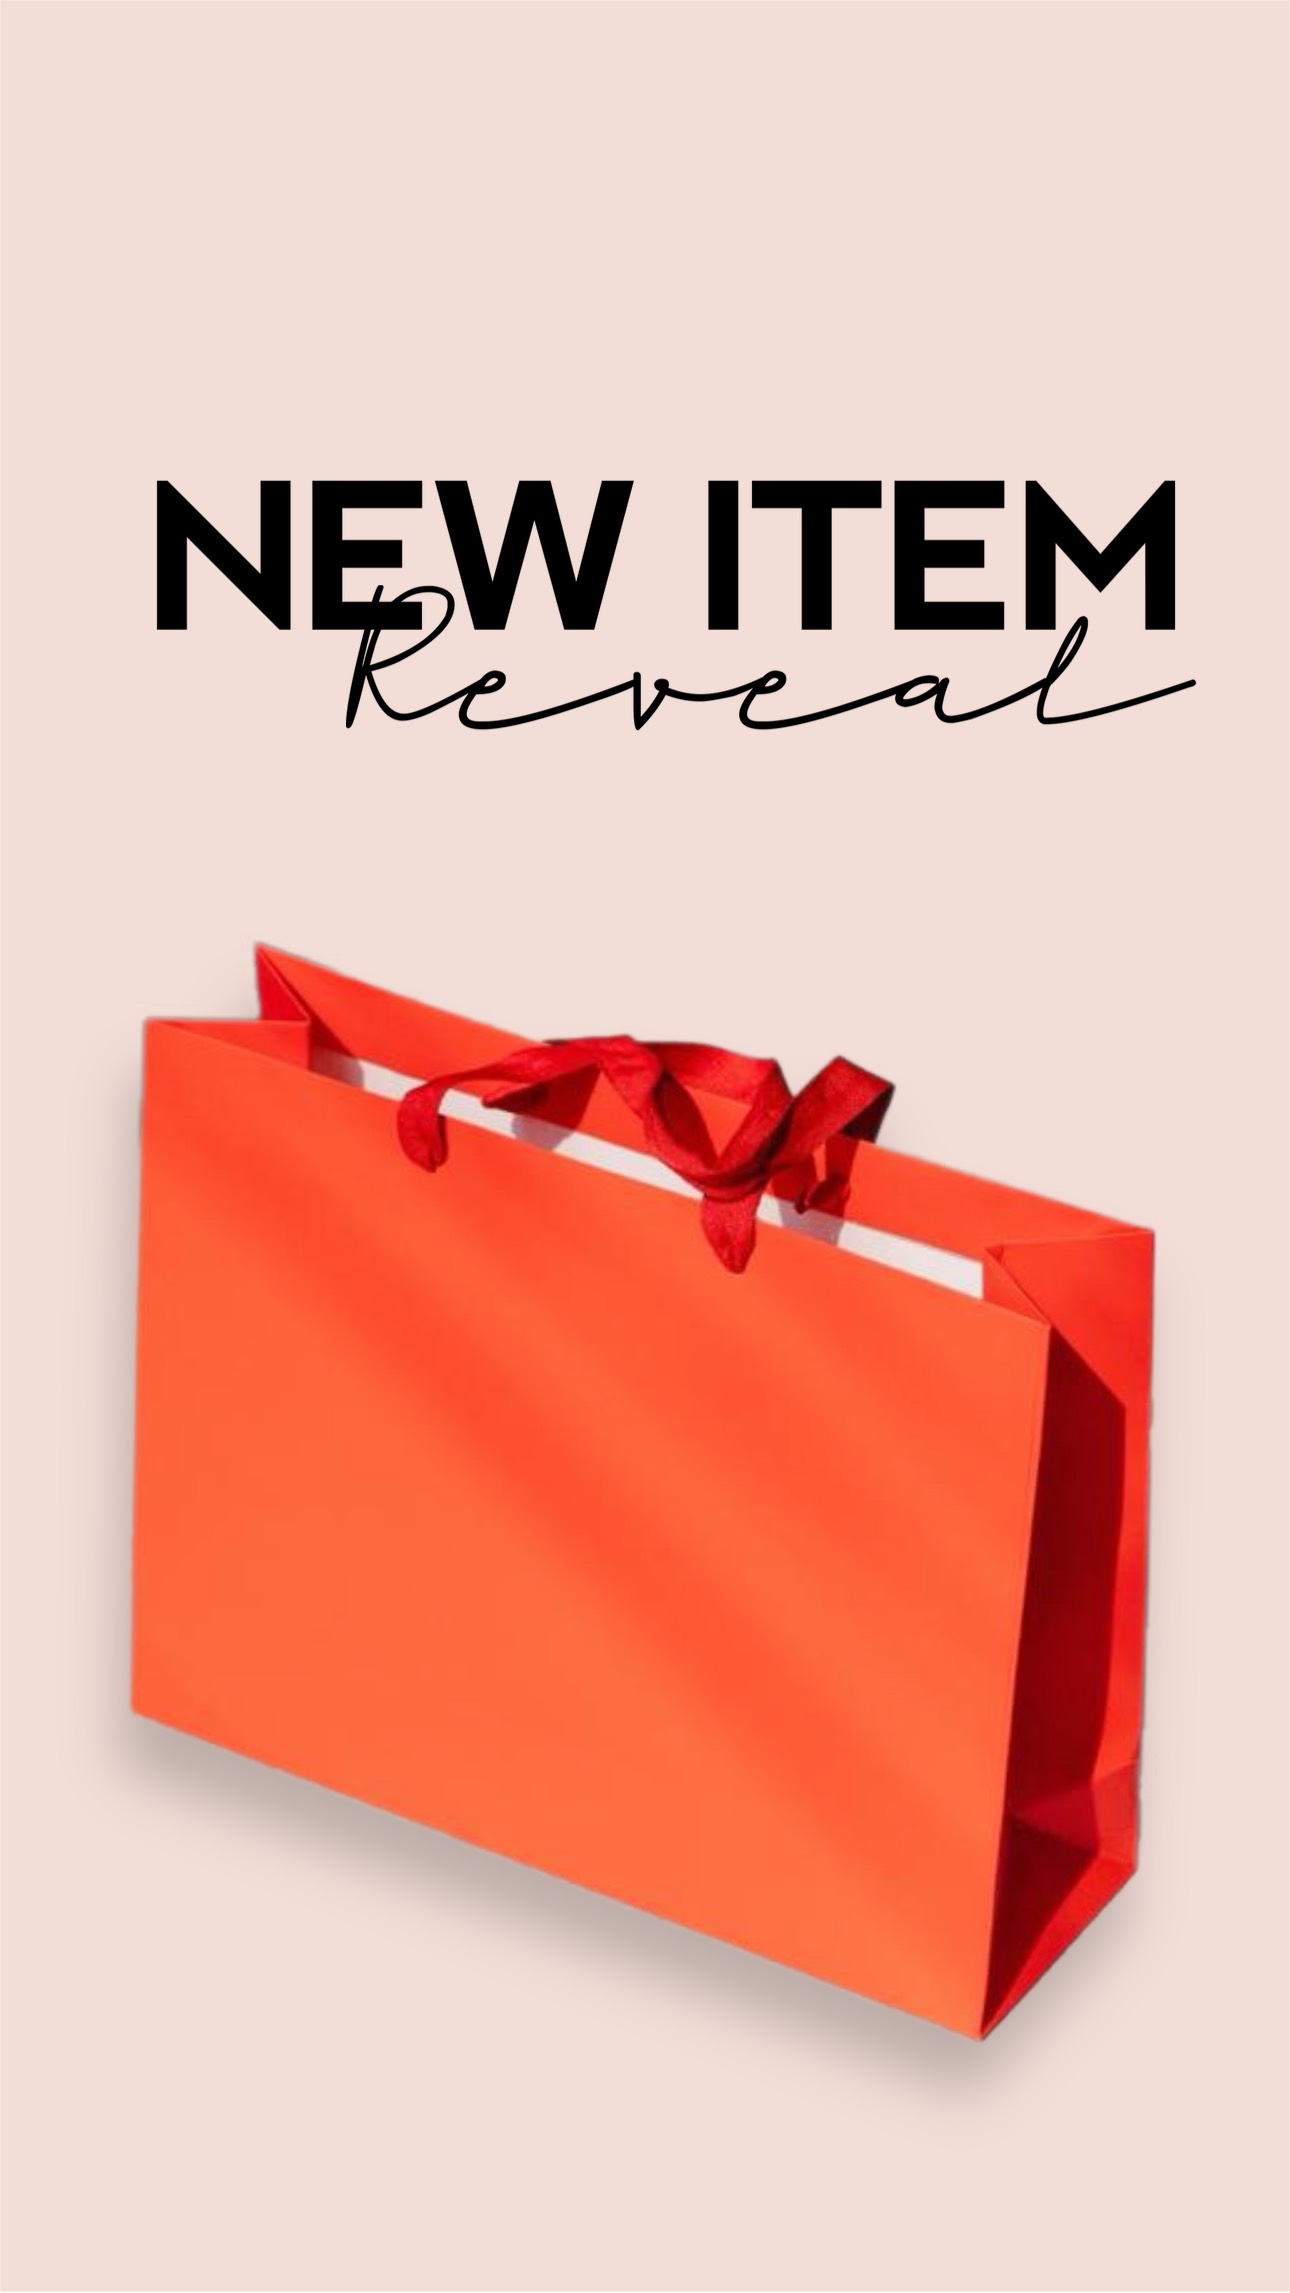 new item orang shoppers bag story magic template 